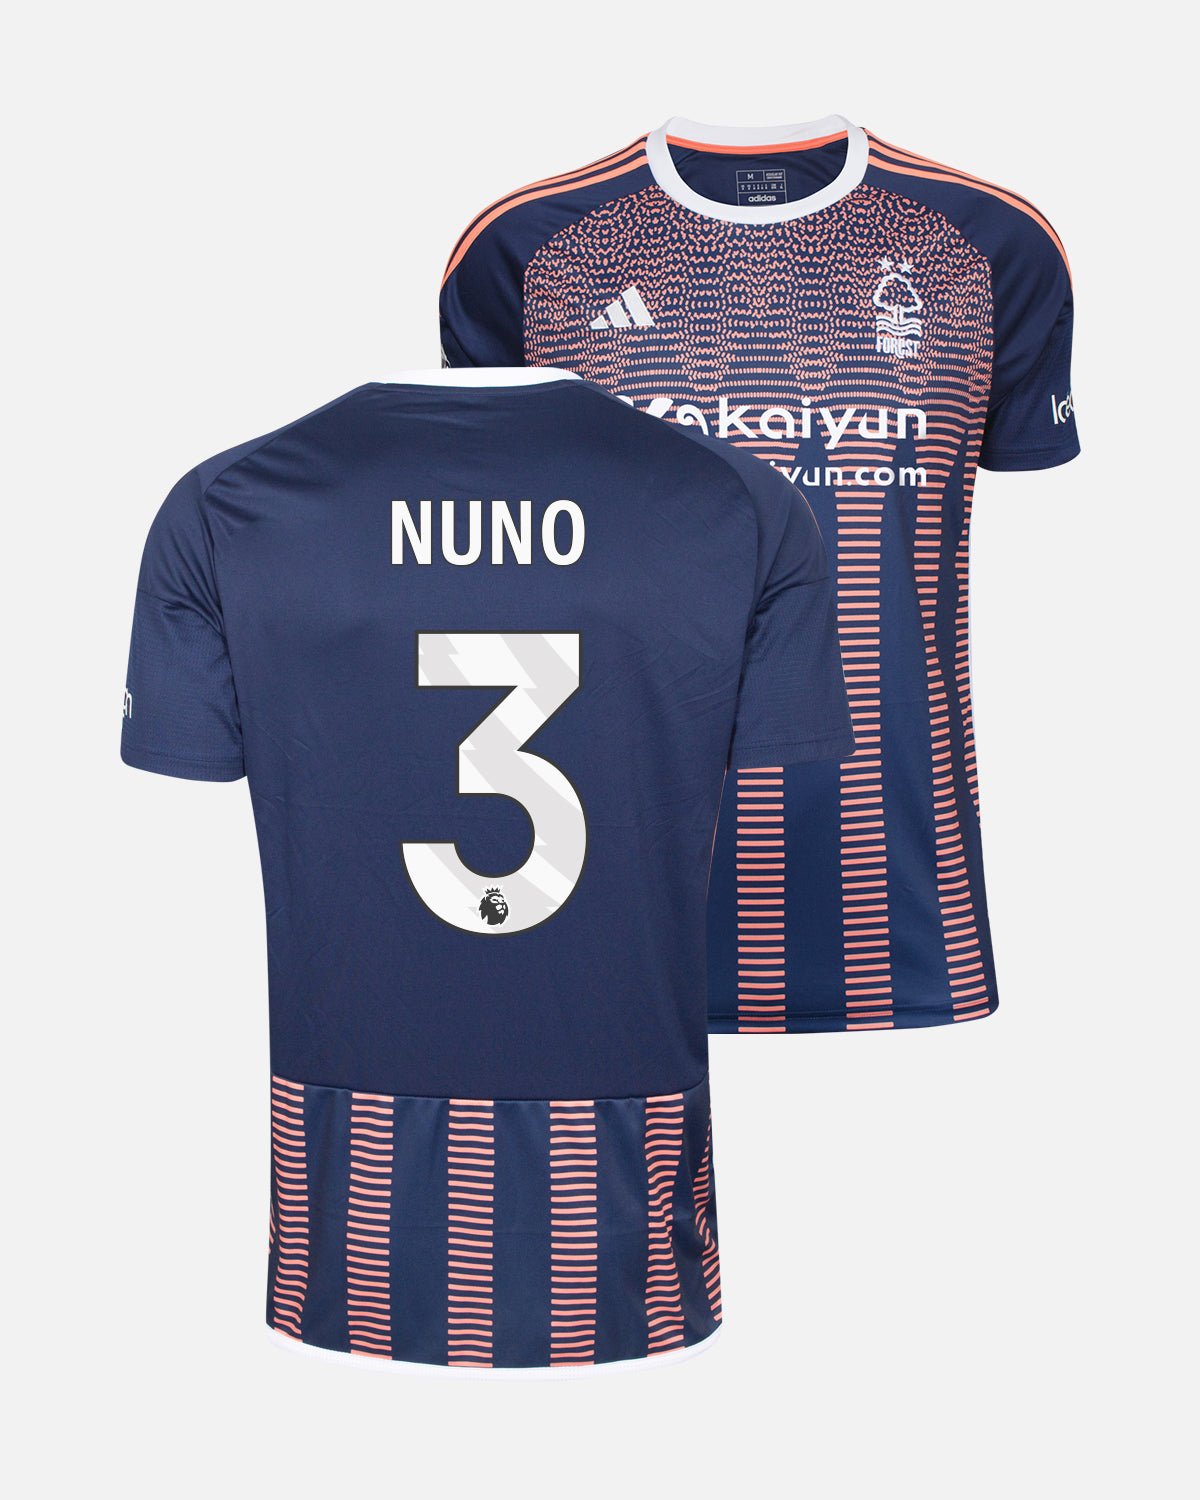 NFFC Third Shirt 23-24 - Nuno 3 - Nottingham Forest FC